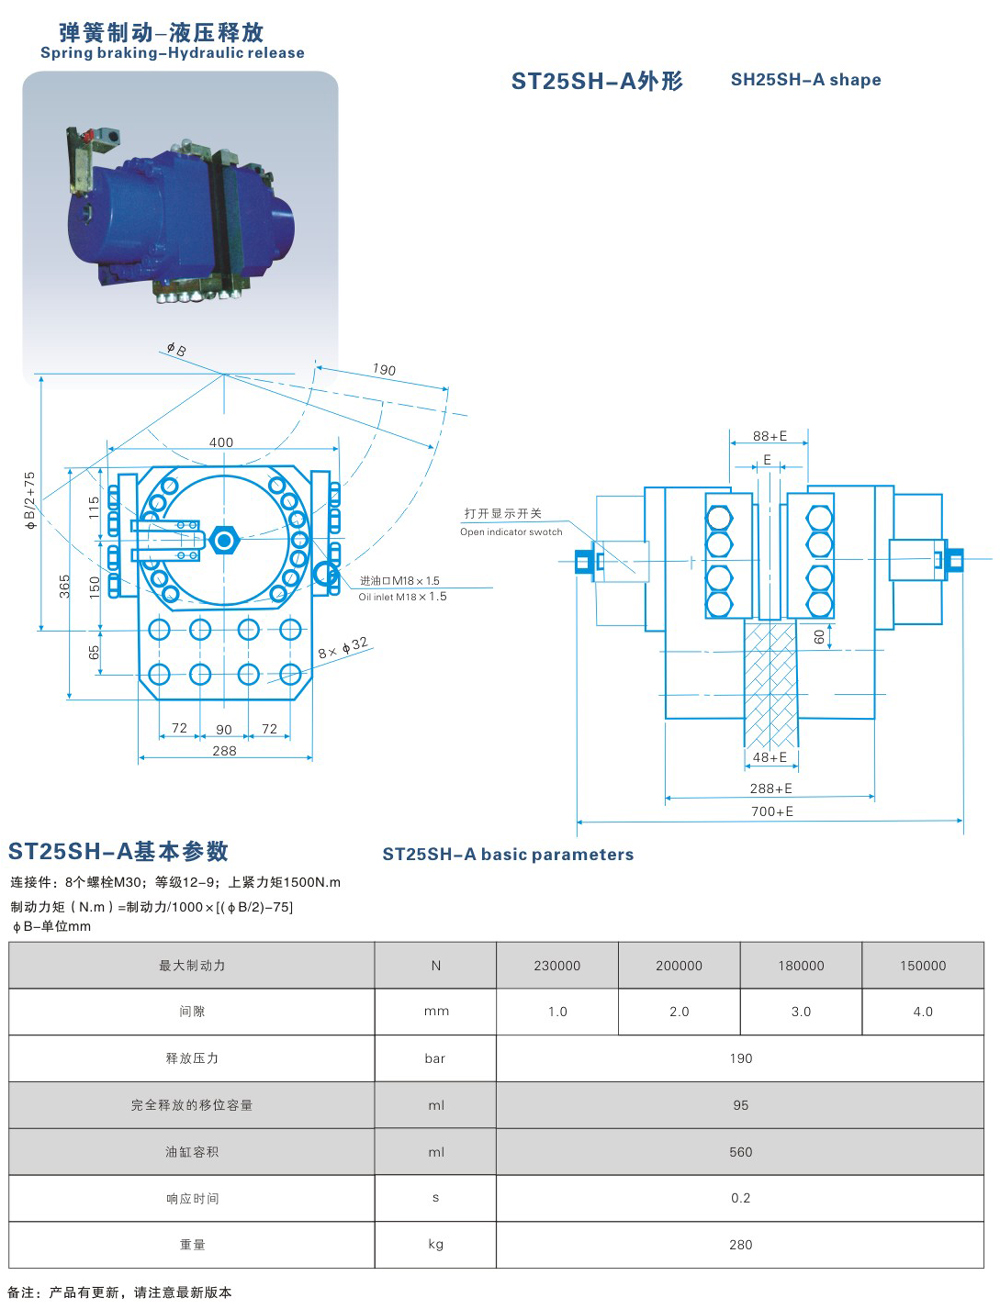 ST25SH-A系列液压失效保护制动器-1